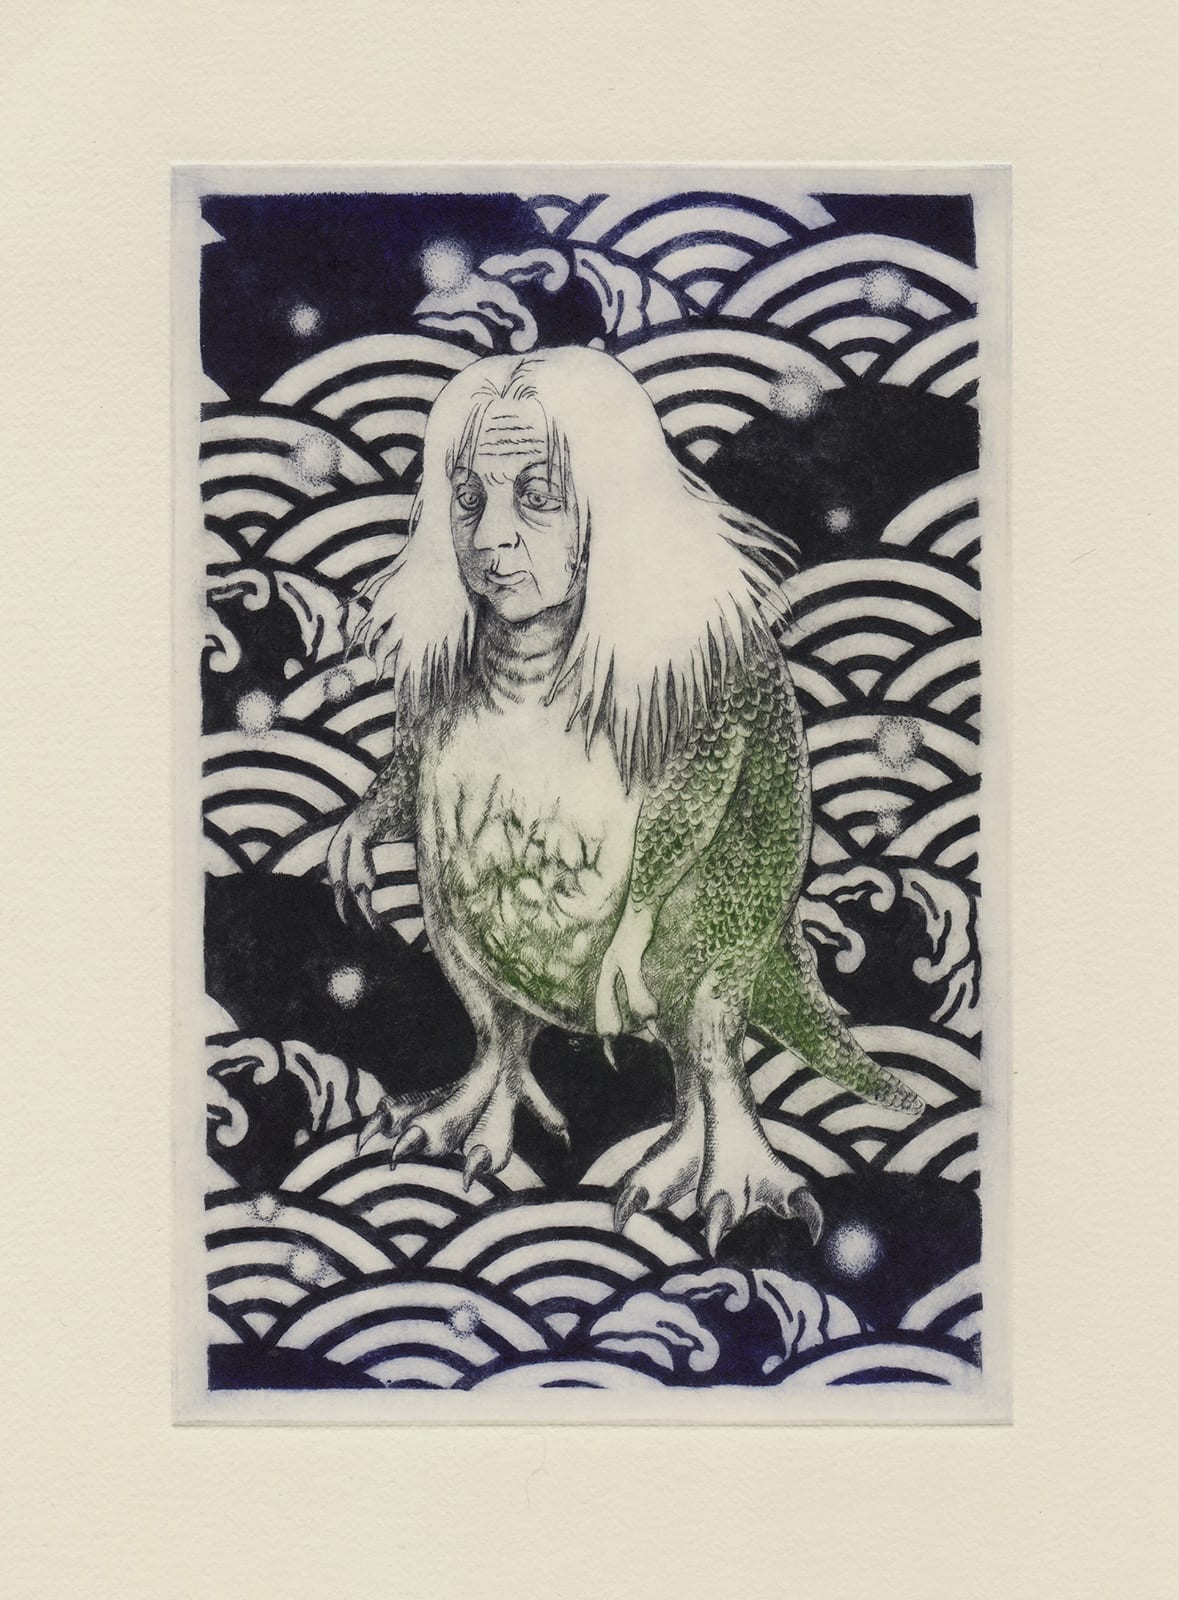 Alie (drypoint etching by Yaemi Shigyo)